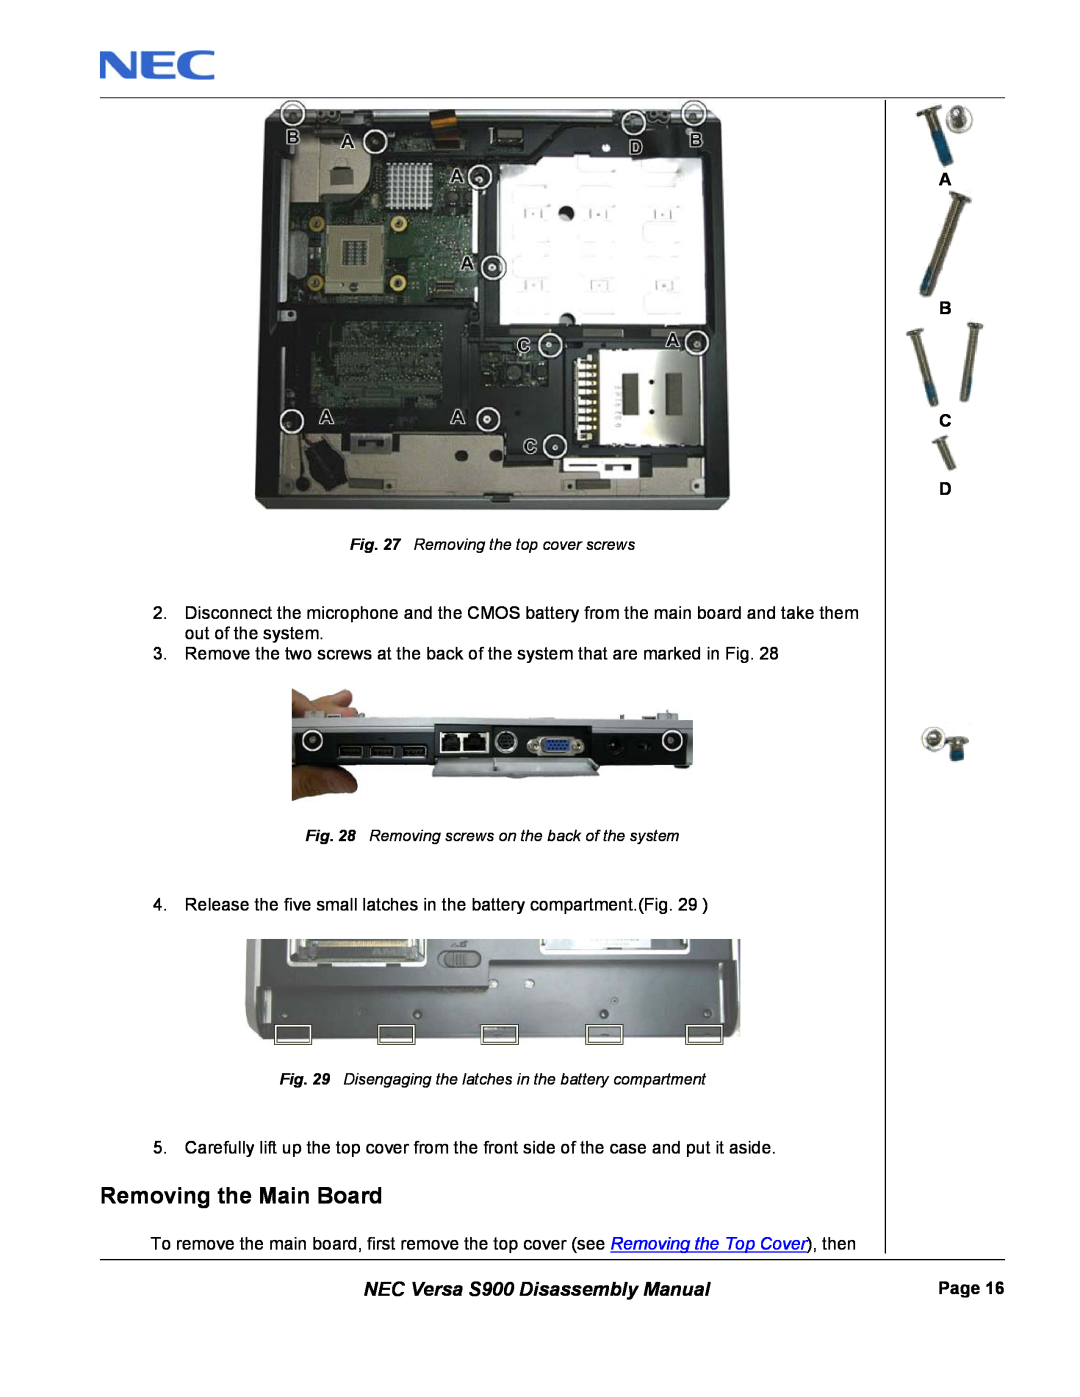 NEC manual Removing the Main Board, A B C D, NEC Versa S900 Disassembly Manual 